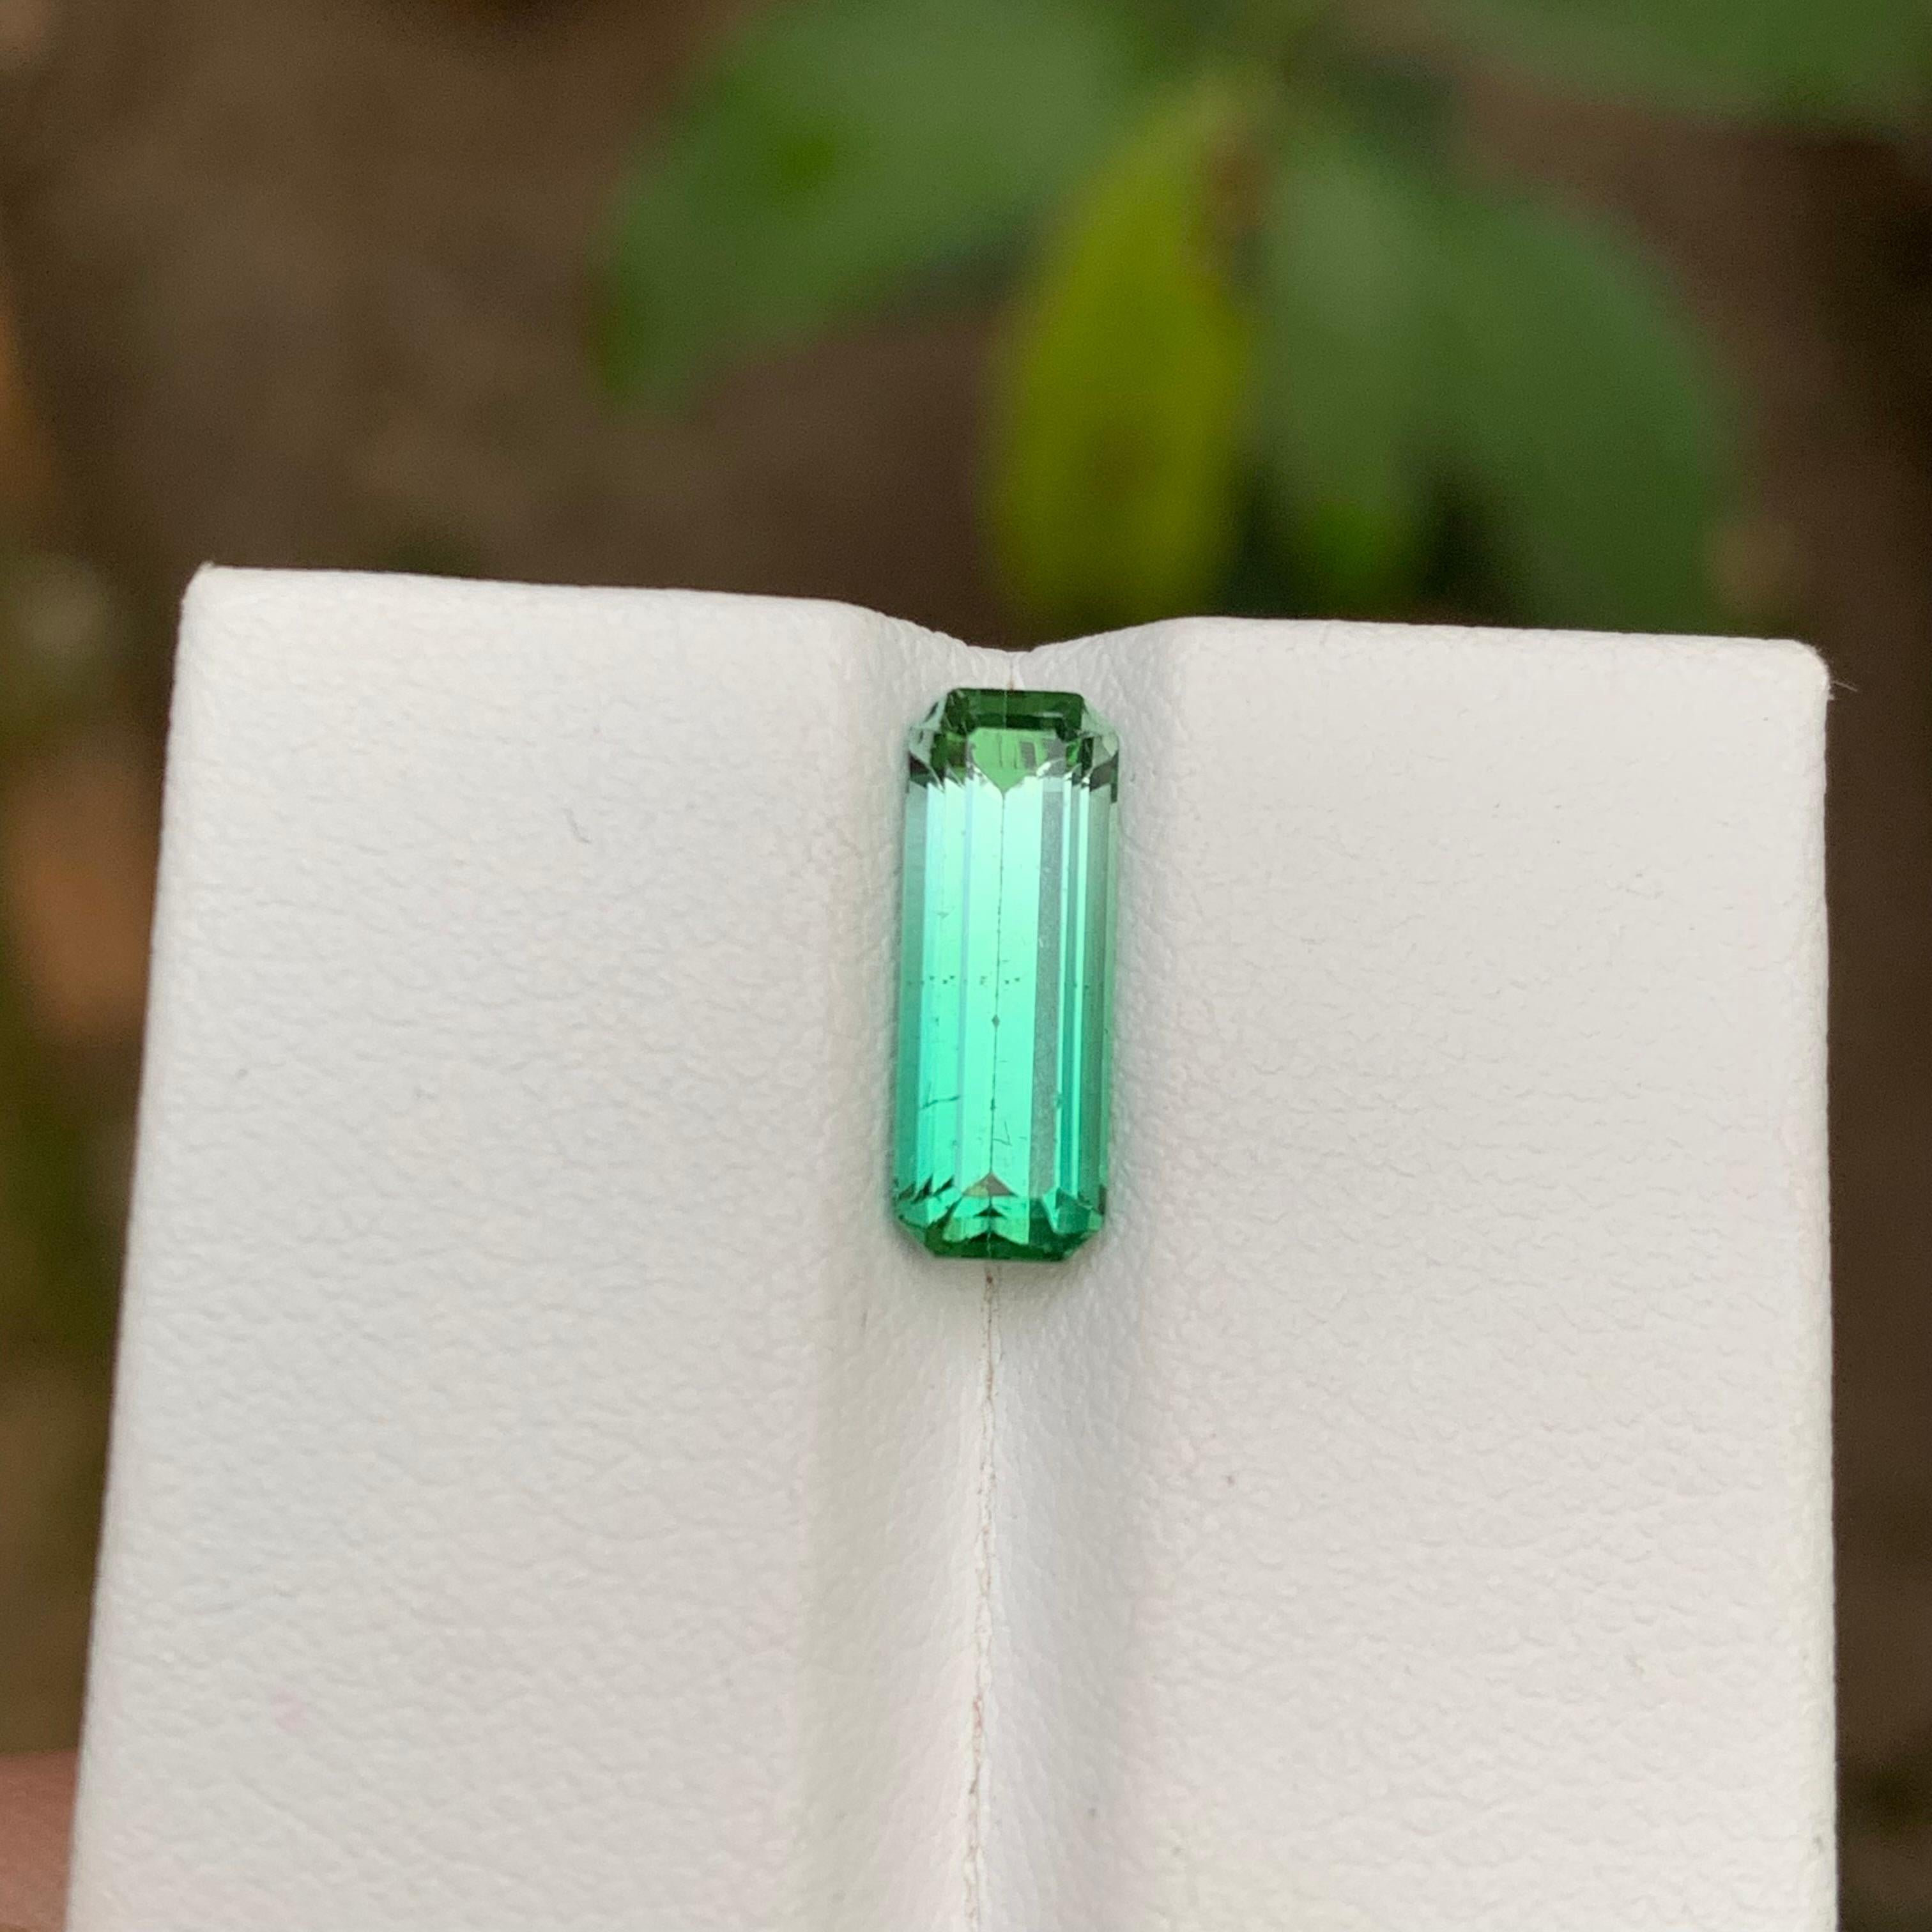 Rare Vivid Bluish Green Bicolor Tourmaline Gemstone 2.25 Ct Emerald Cut for Ring For Sale 1